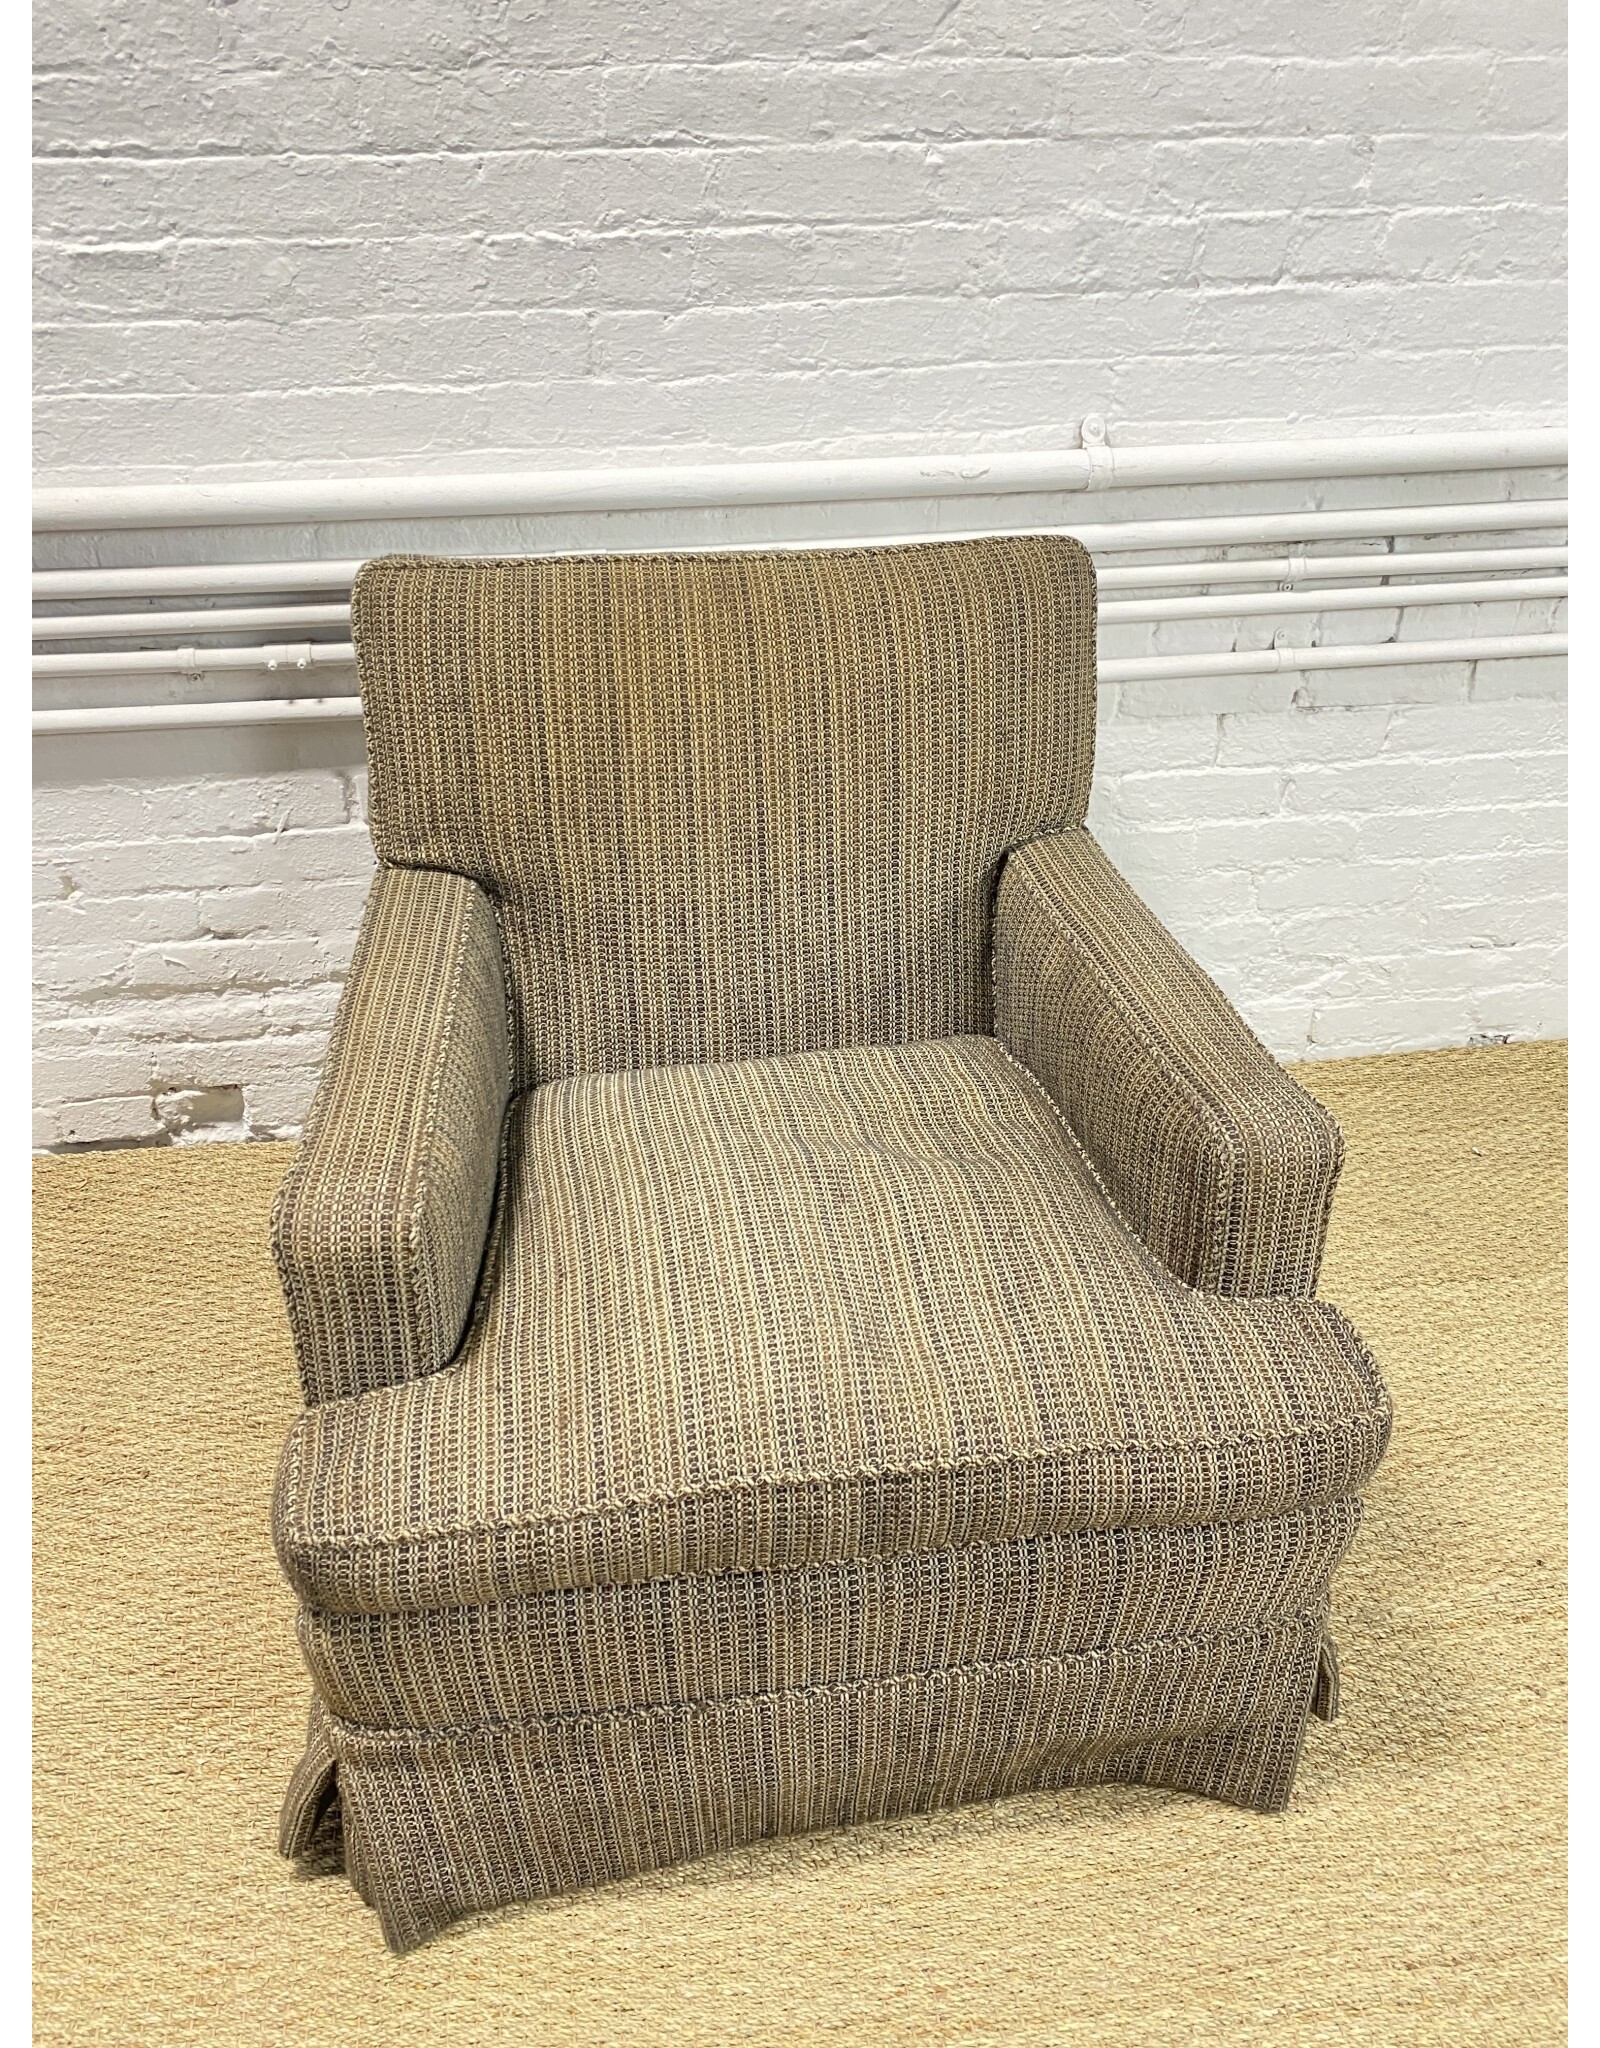 Mid-Century Brown Armchair by Joseph Giannola